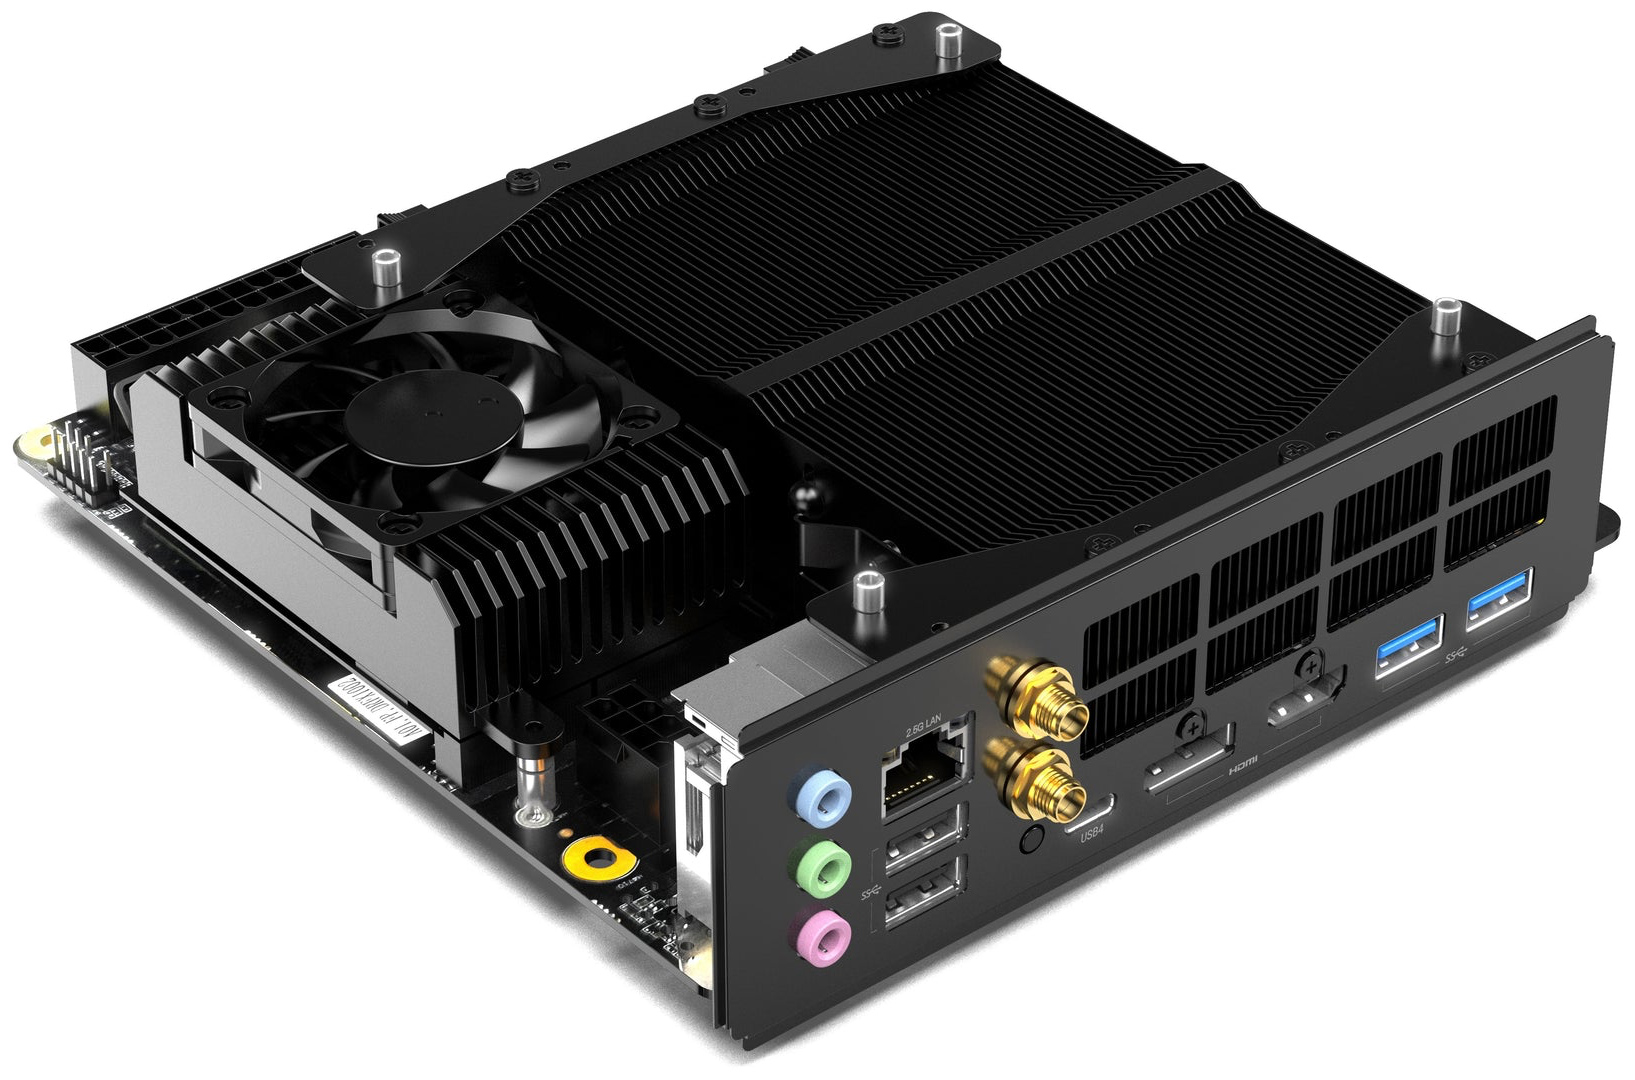 Minisforum Launches AR900i: A $559 Core i9-13900HX Mini-ITX Platform